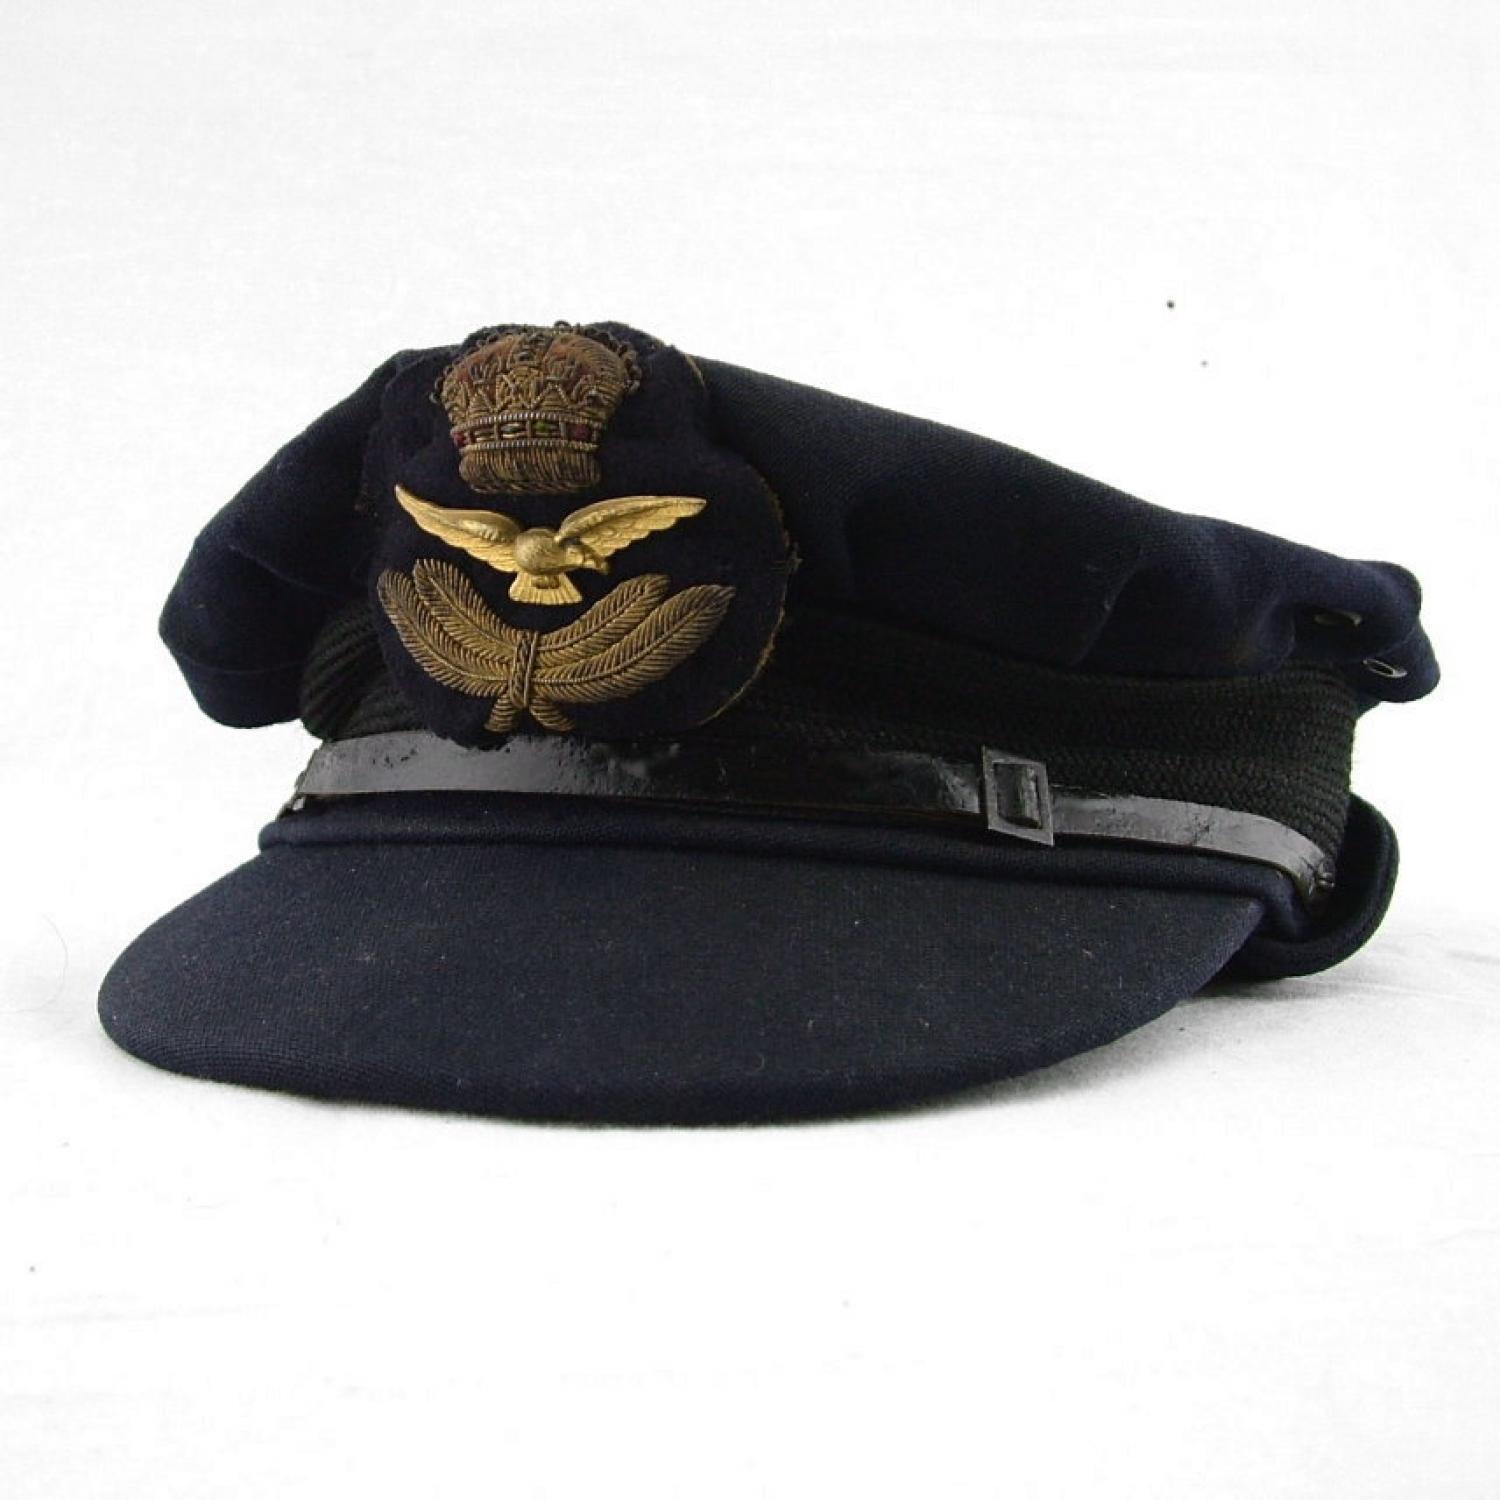 WAAF Officer's Service Dress Cap, Australian